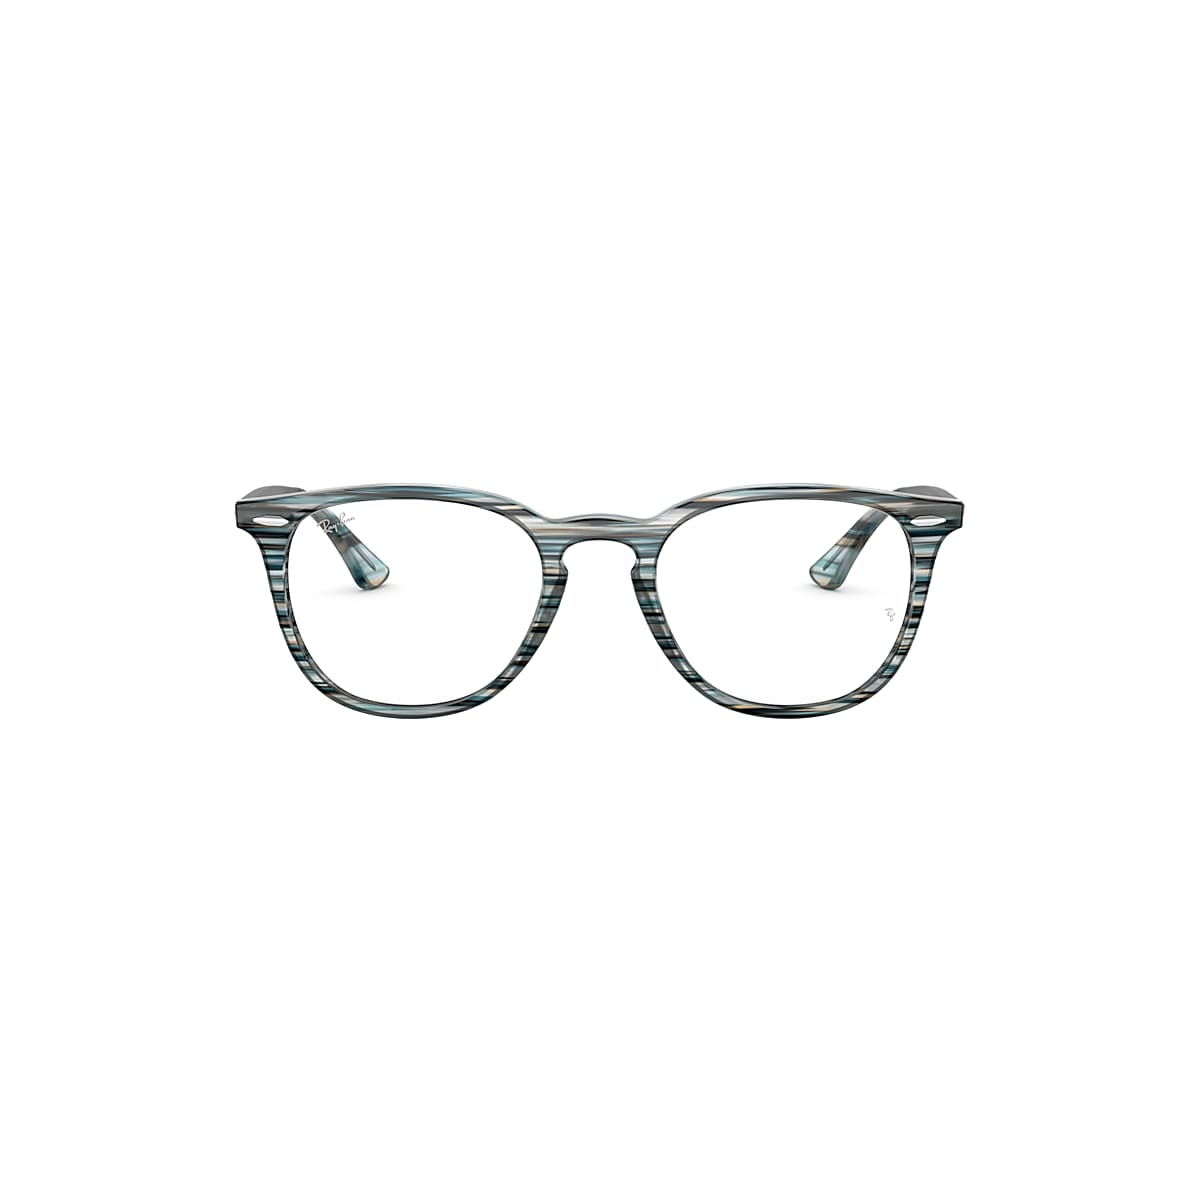 RB7159 OPTICS Eyeglasses with Striped Blue Grey Frame - Ray-Ban